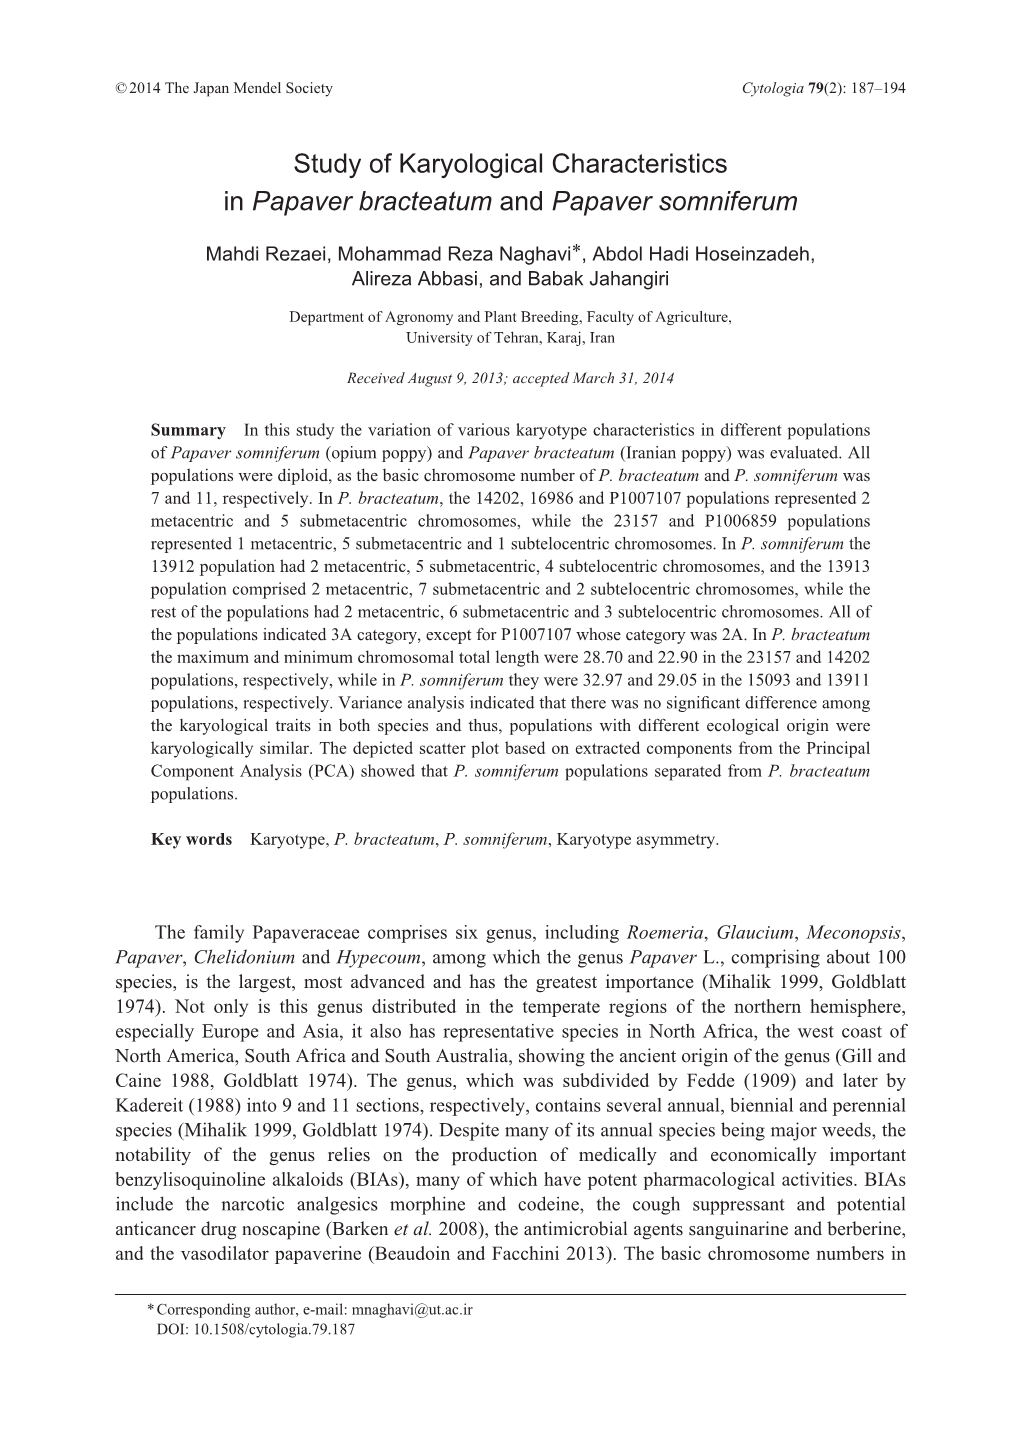 Study of Karyological Characteristics in Papaver Bracteatum and Papaver Somniferum